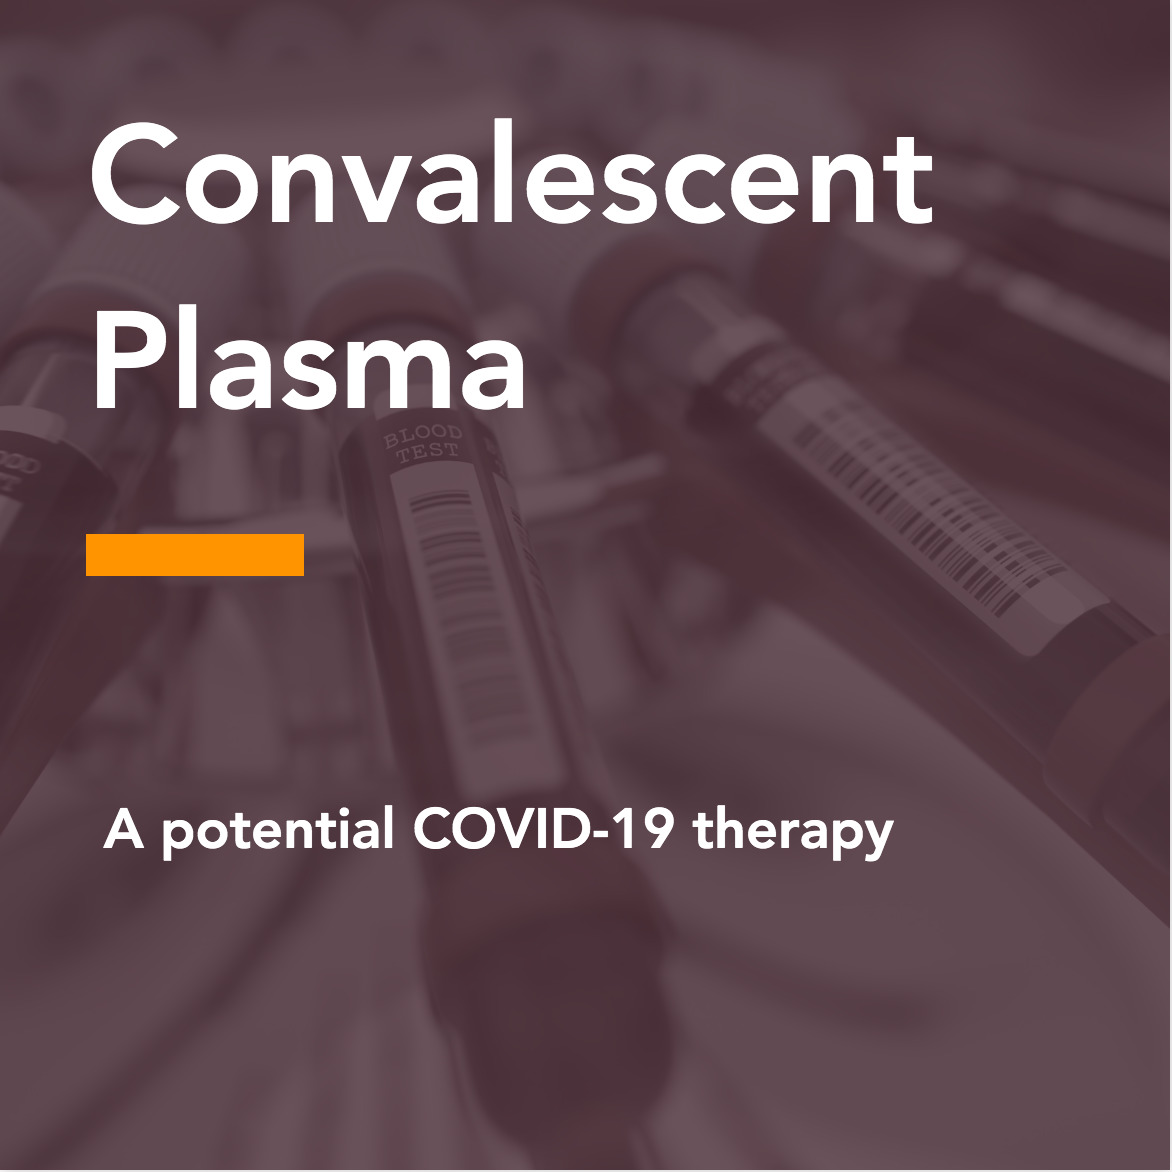 Convalescent plasma